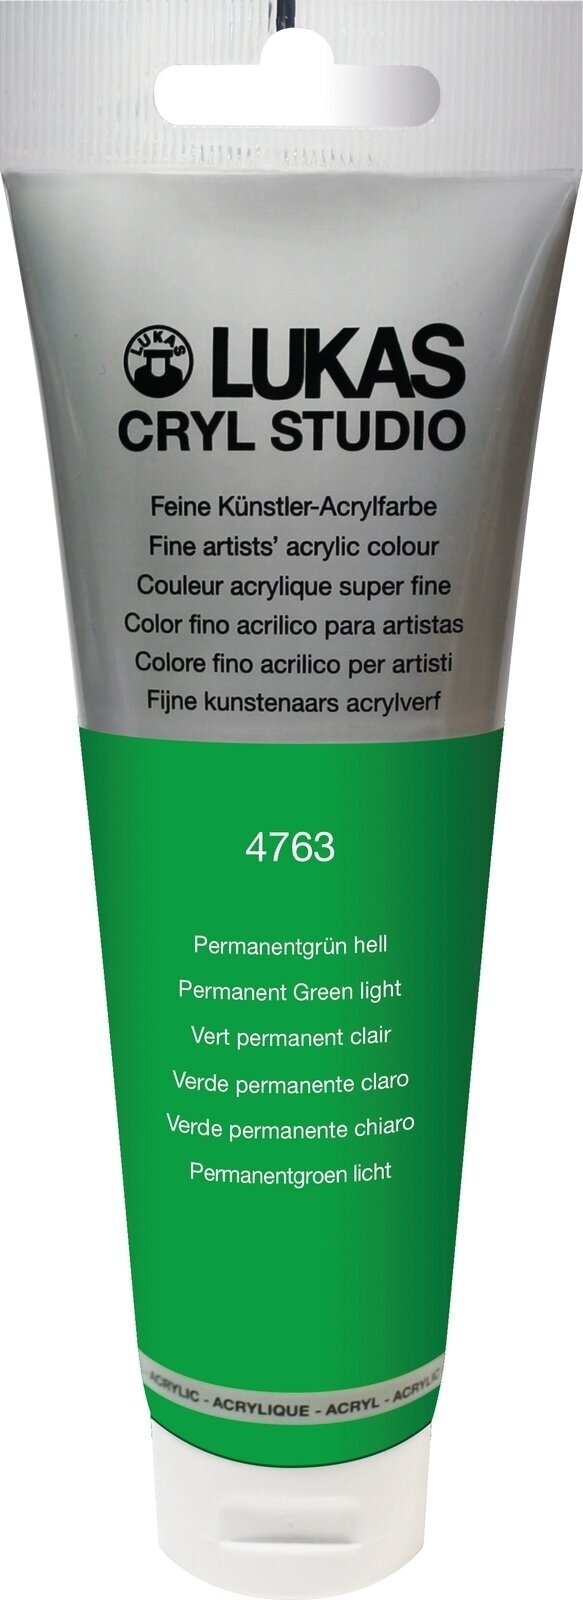 Acrylic Paint Lukas Cryl Studio Acrylic Paint 125 ml Permanent Green Light